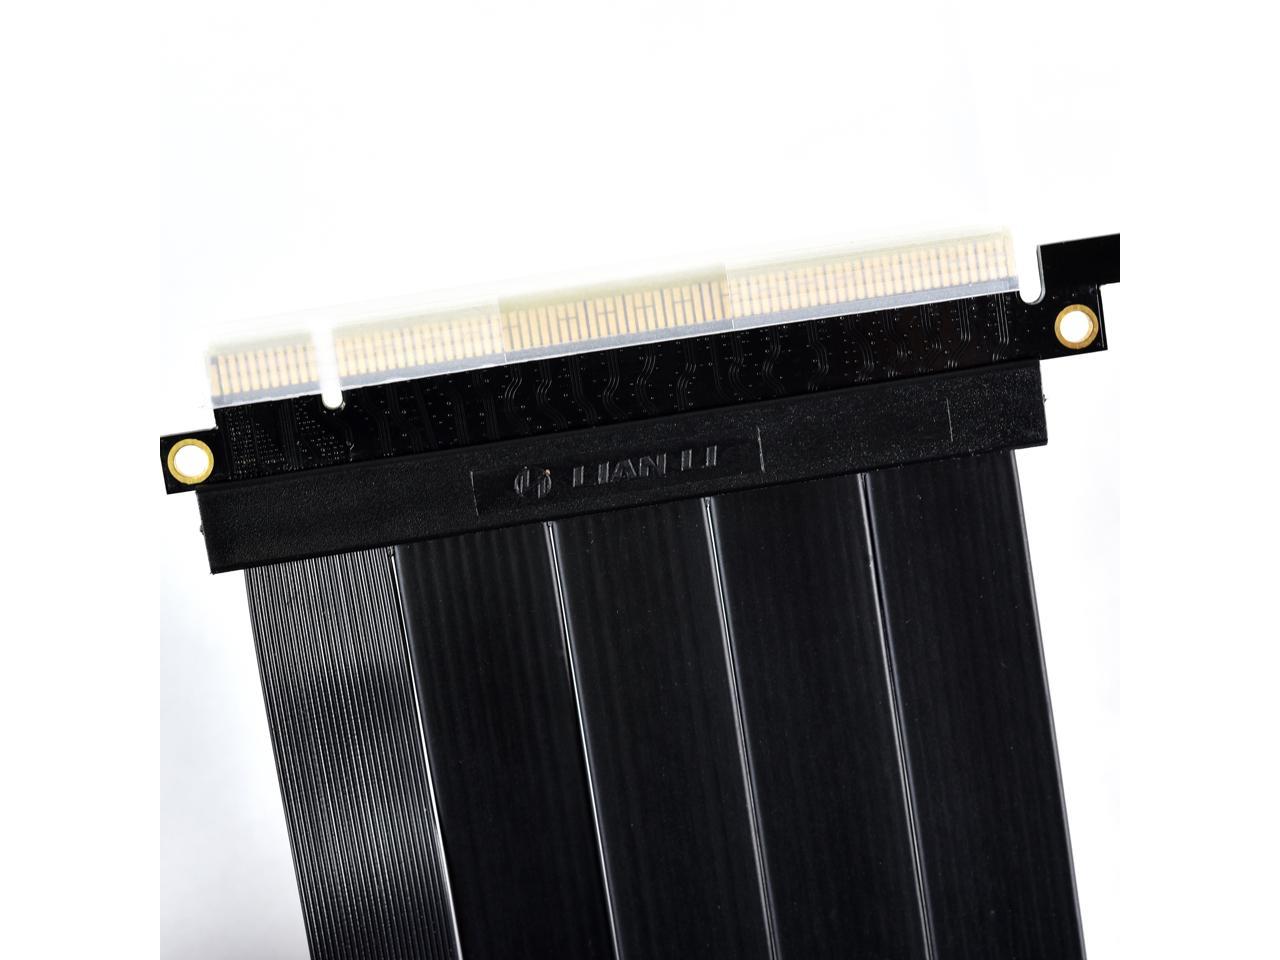 LIAN LI O11D MINI PCIe 4.0 VERTICAL GPU BRACKET KIT - O11 MINI BLACK